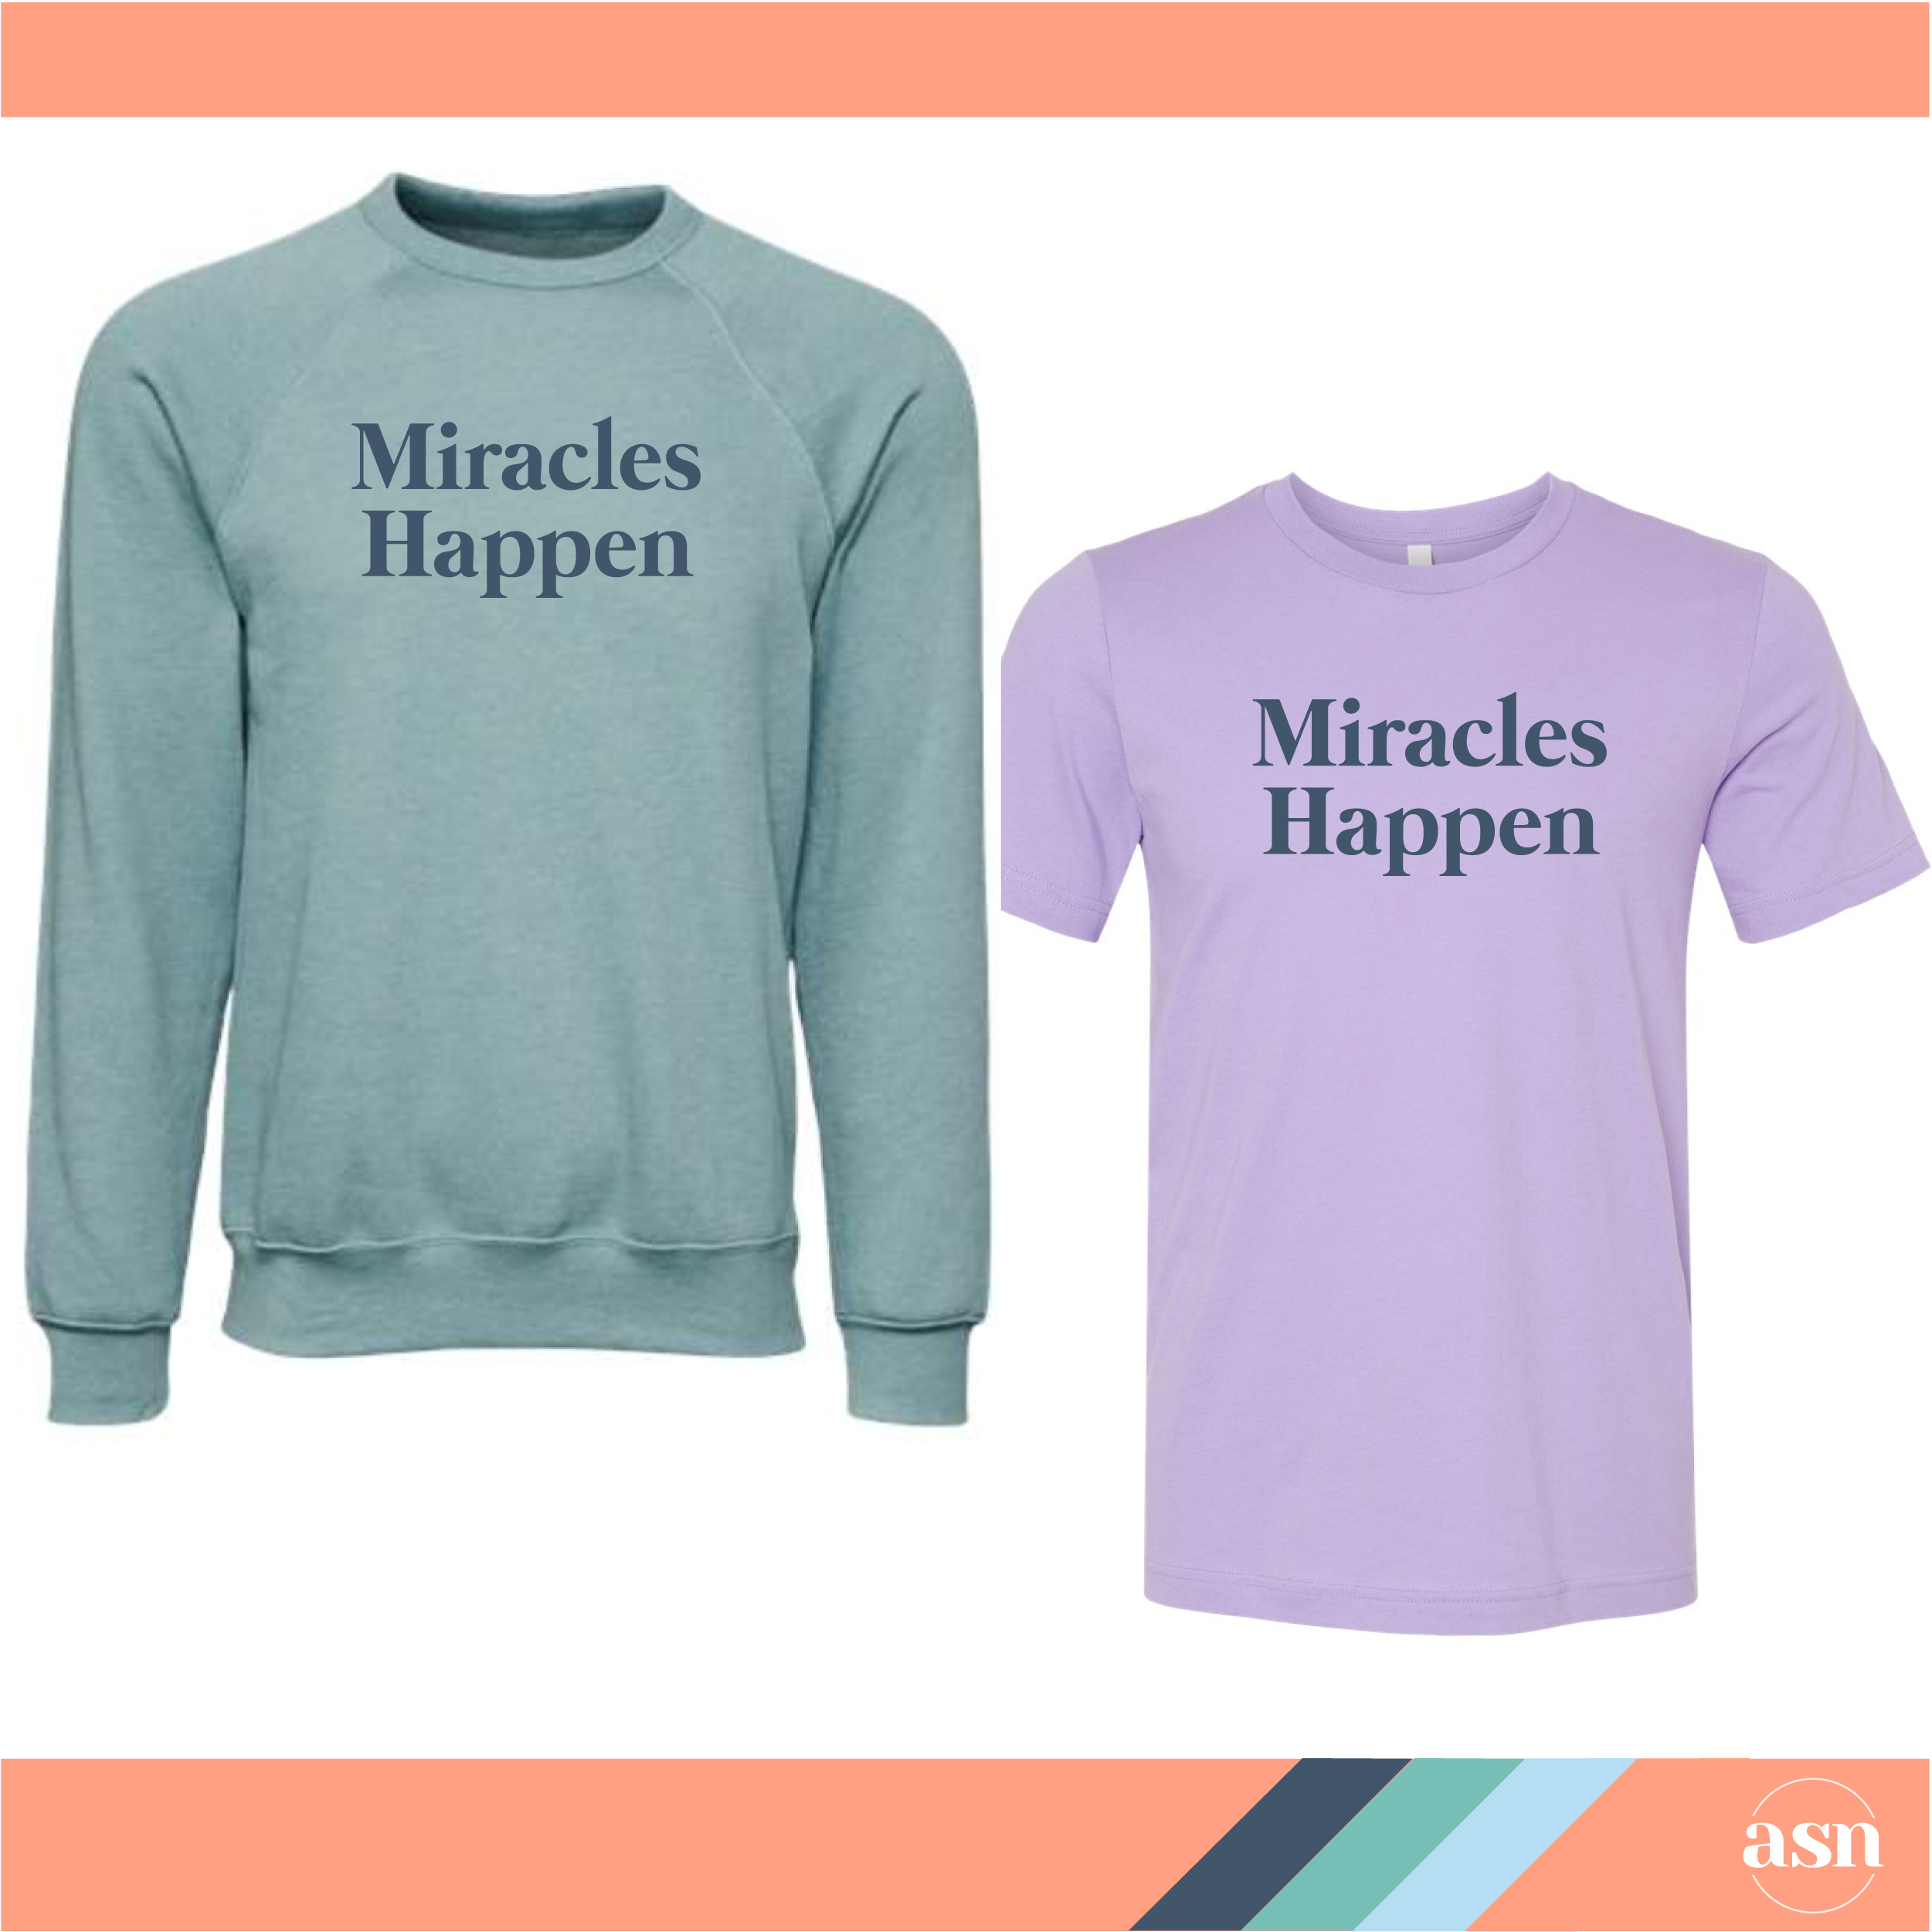 ASN Bundle 2 - "Miracles Happen" Lavender + Sweatshirt